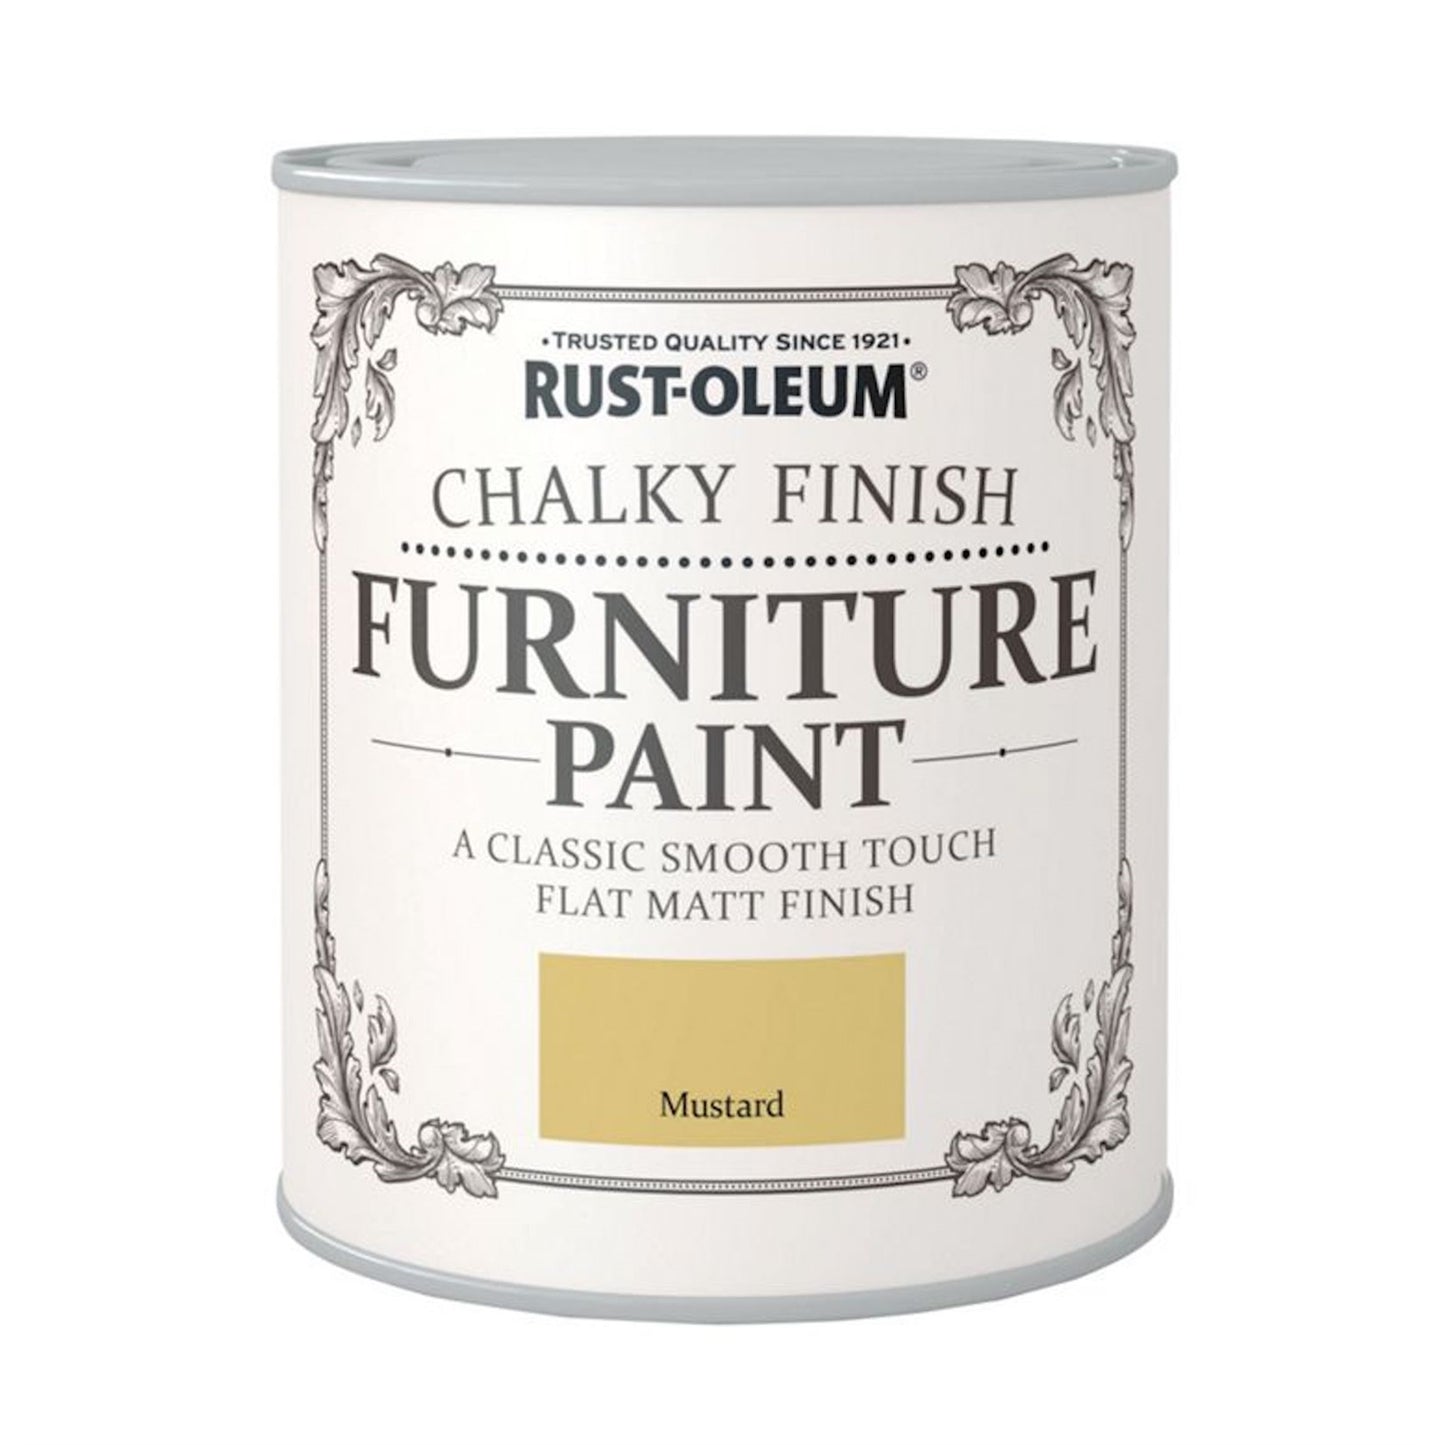 Rust-Oleum Chalky Finish Furniture Paint Mustard